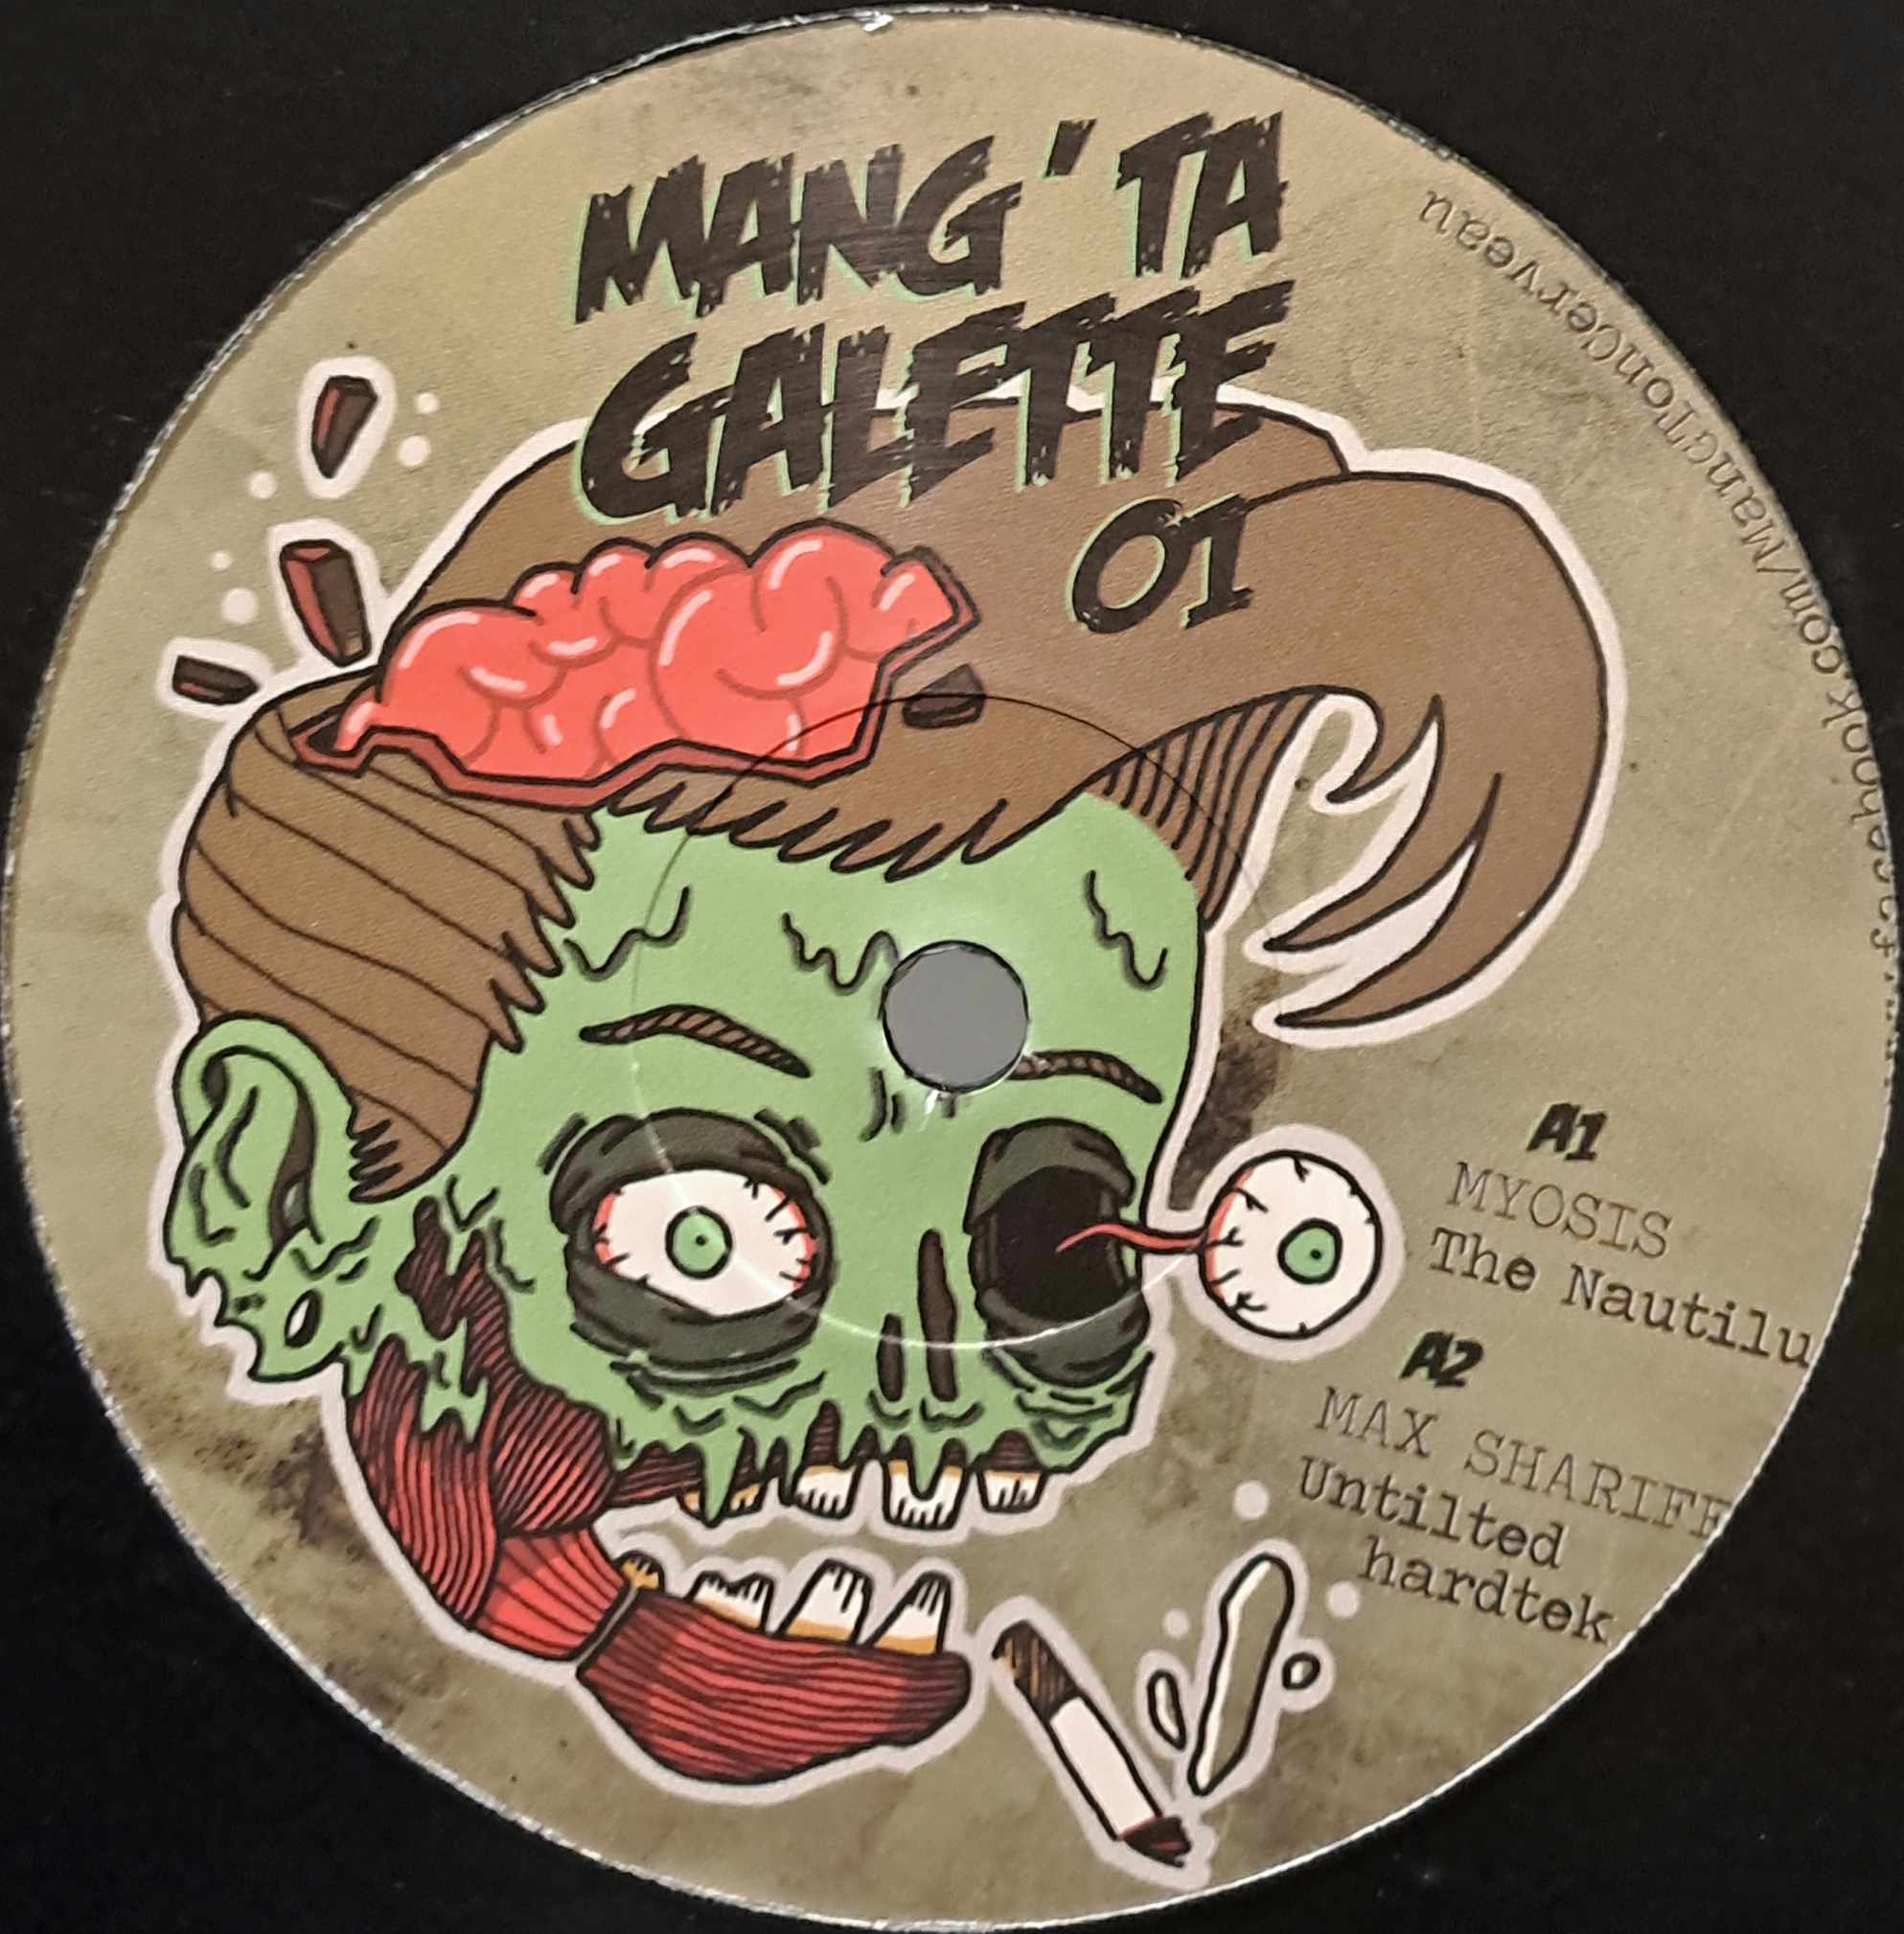 Mang' Ta Galette 01 - vinyle tribecore